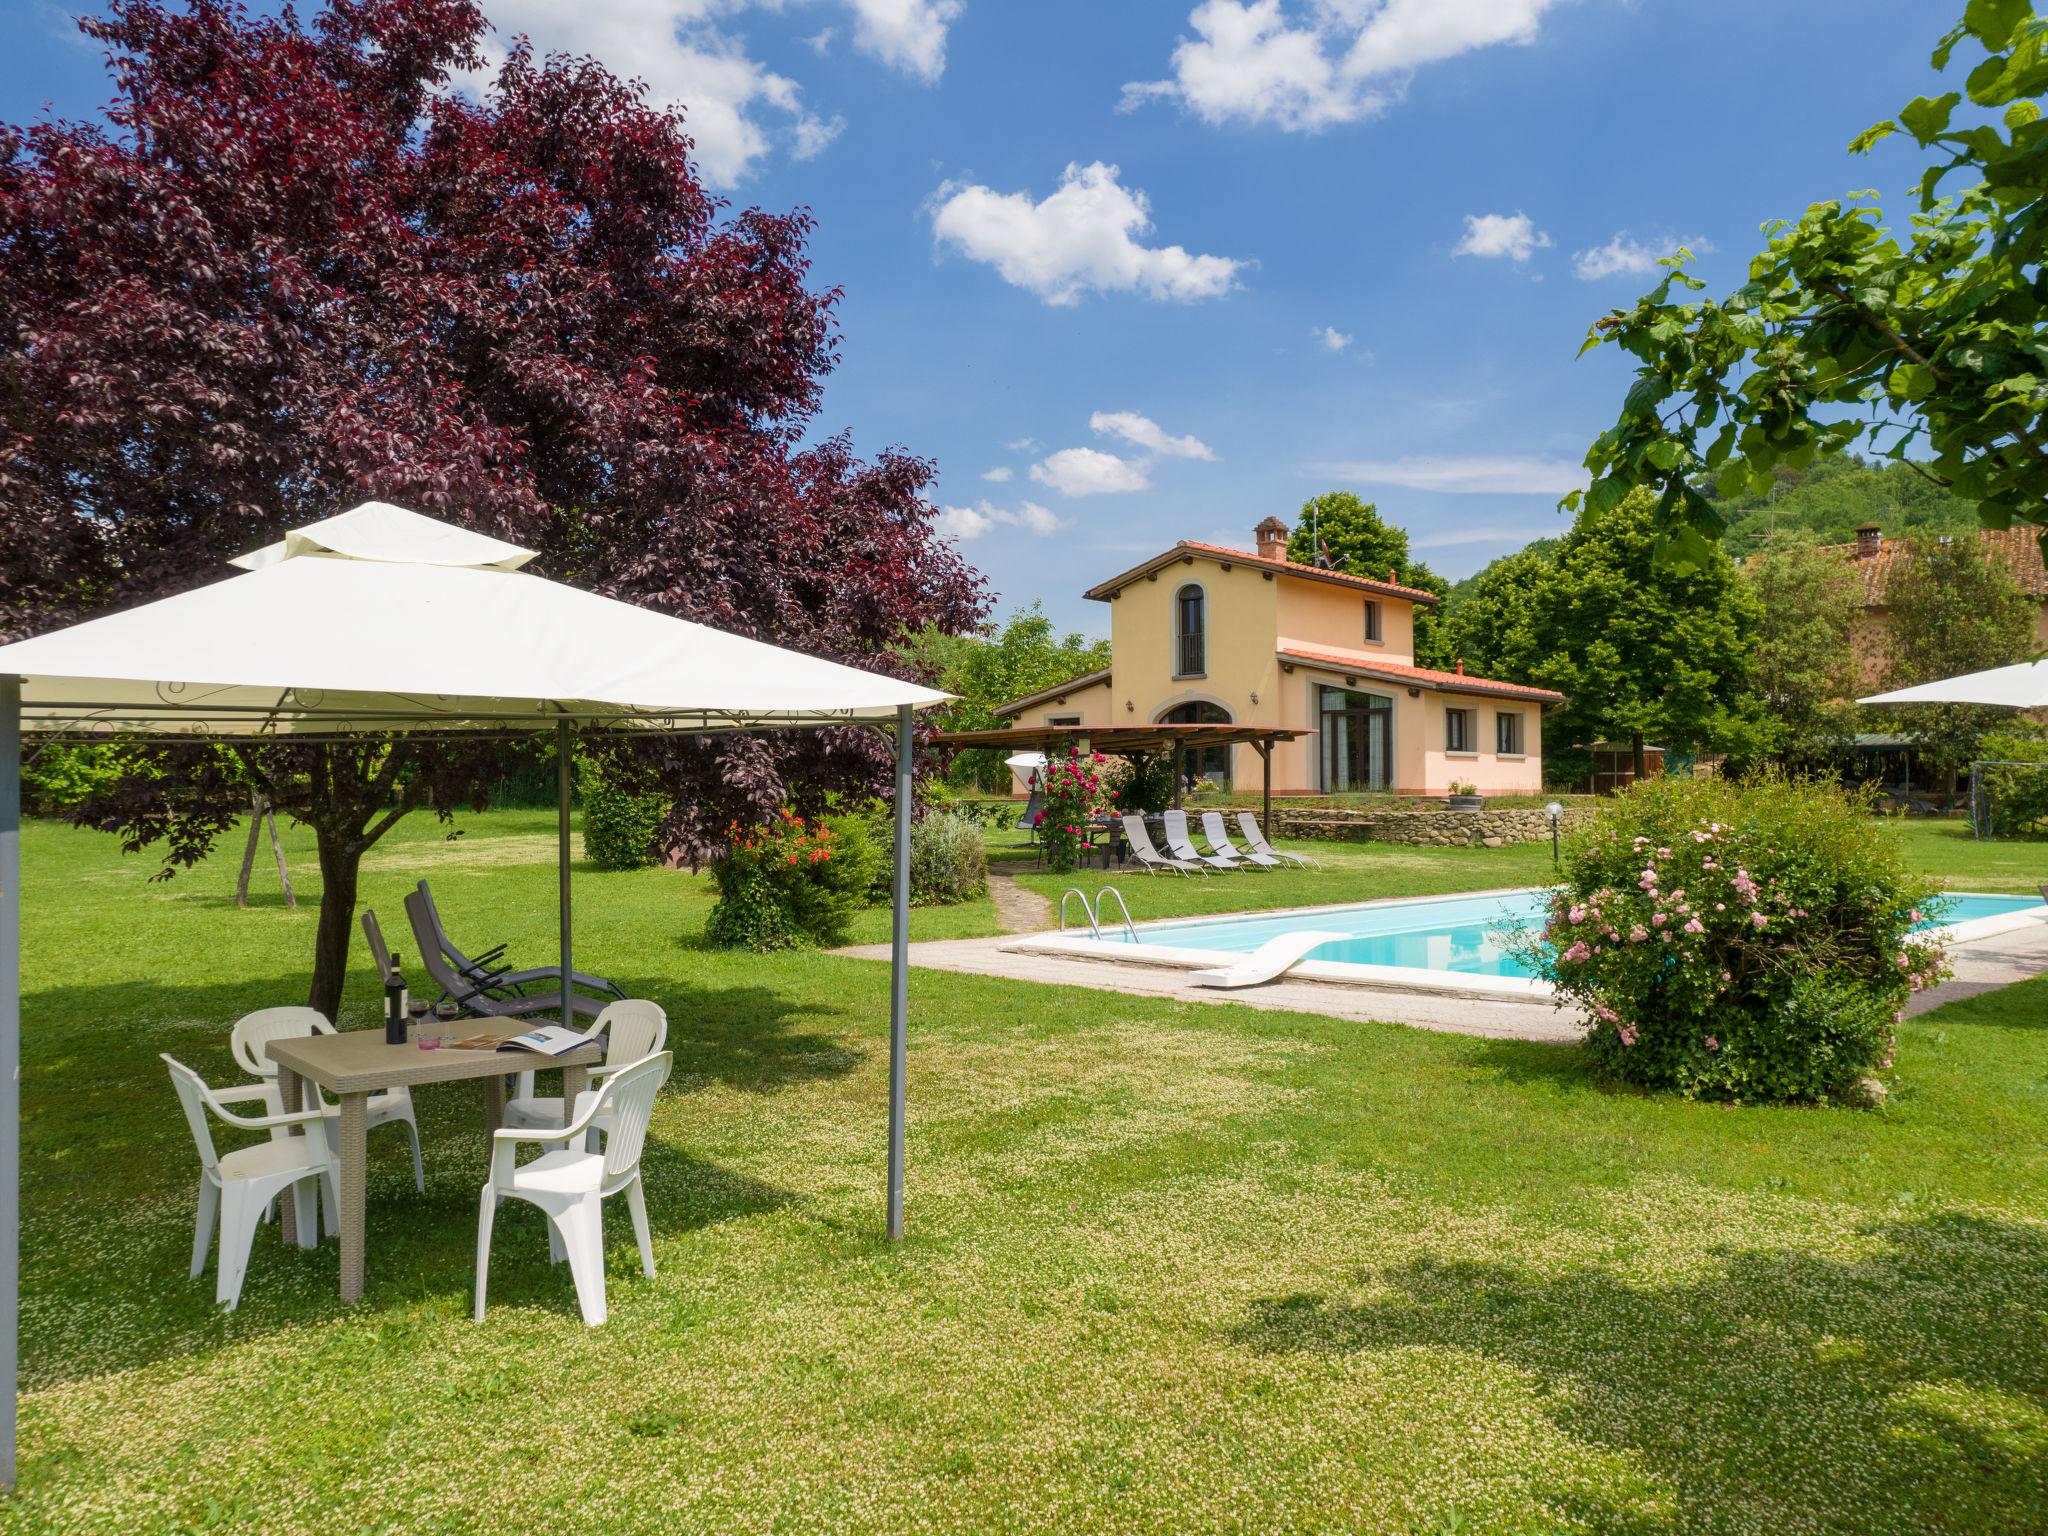 Photo 1 - 3 bedroom House in Terranuova Bracciolini with swimming pool and garden